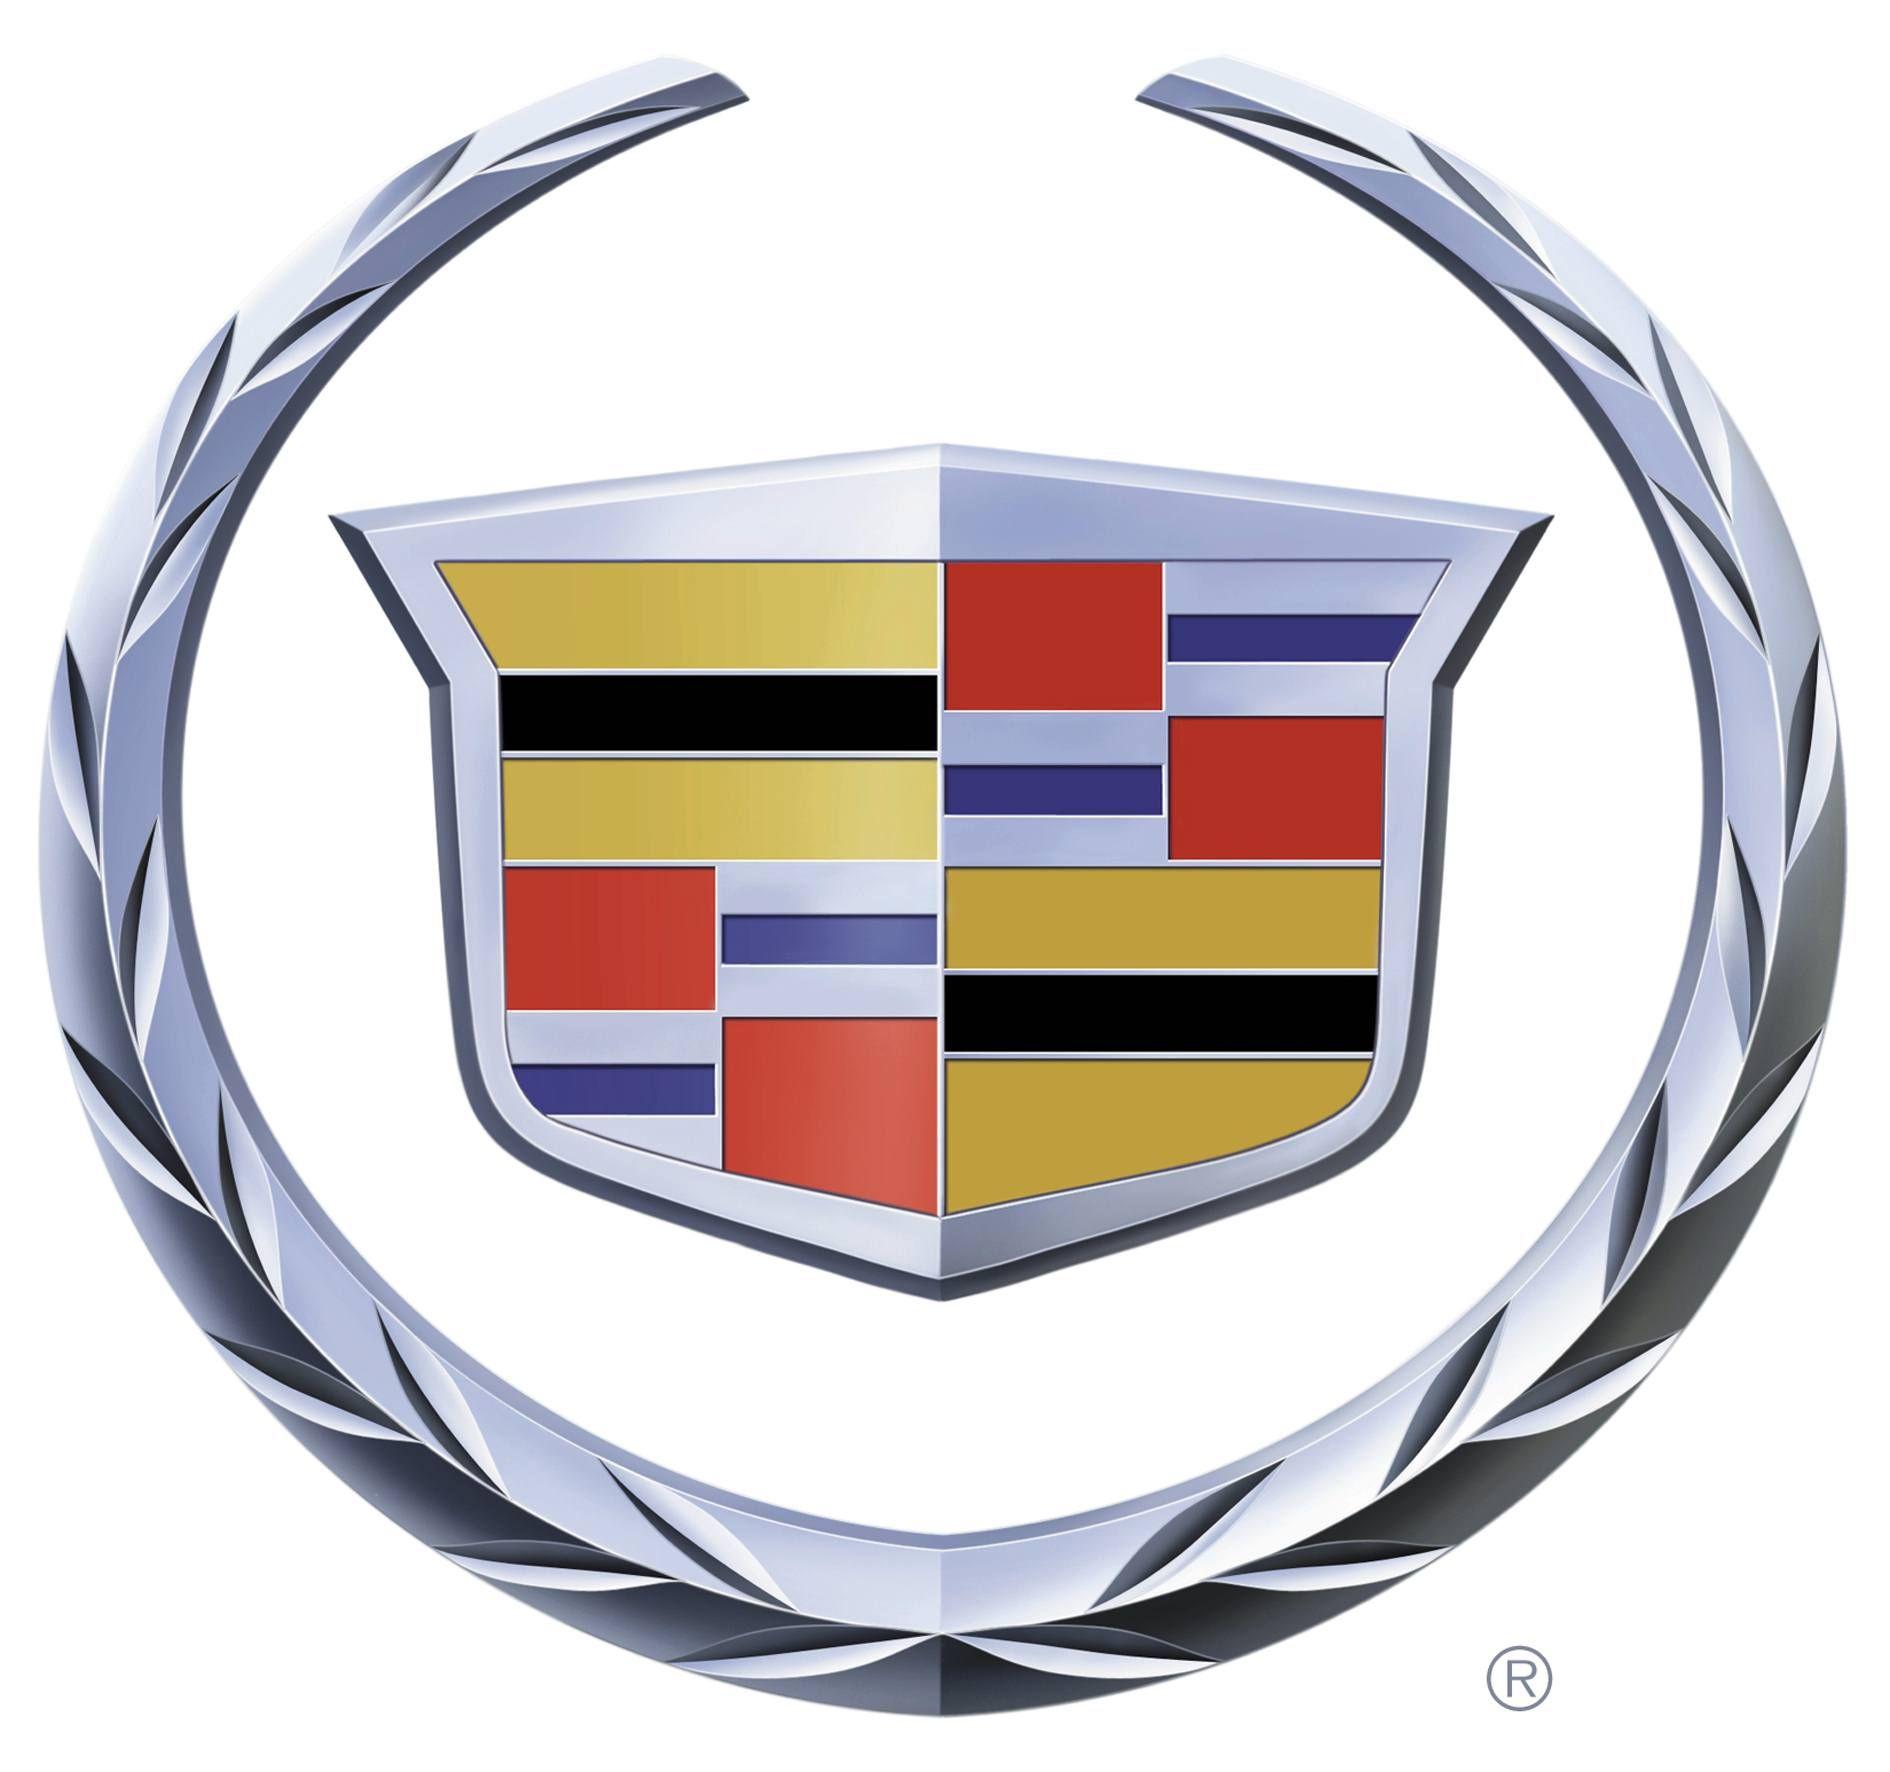 Cadillac Logo - Does the Cadillac logo look sort of like the Maryland flag to any of ...